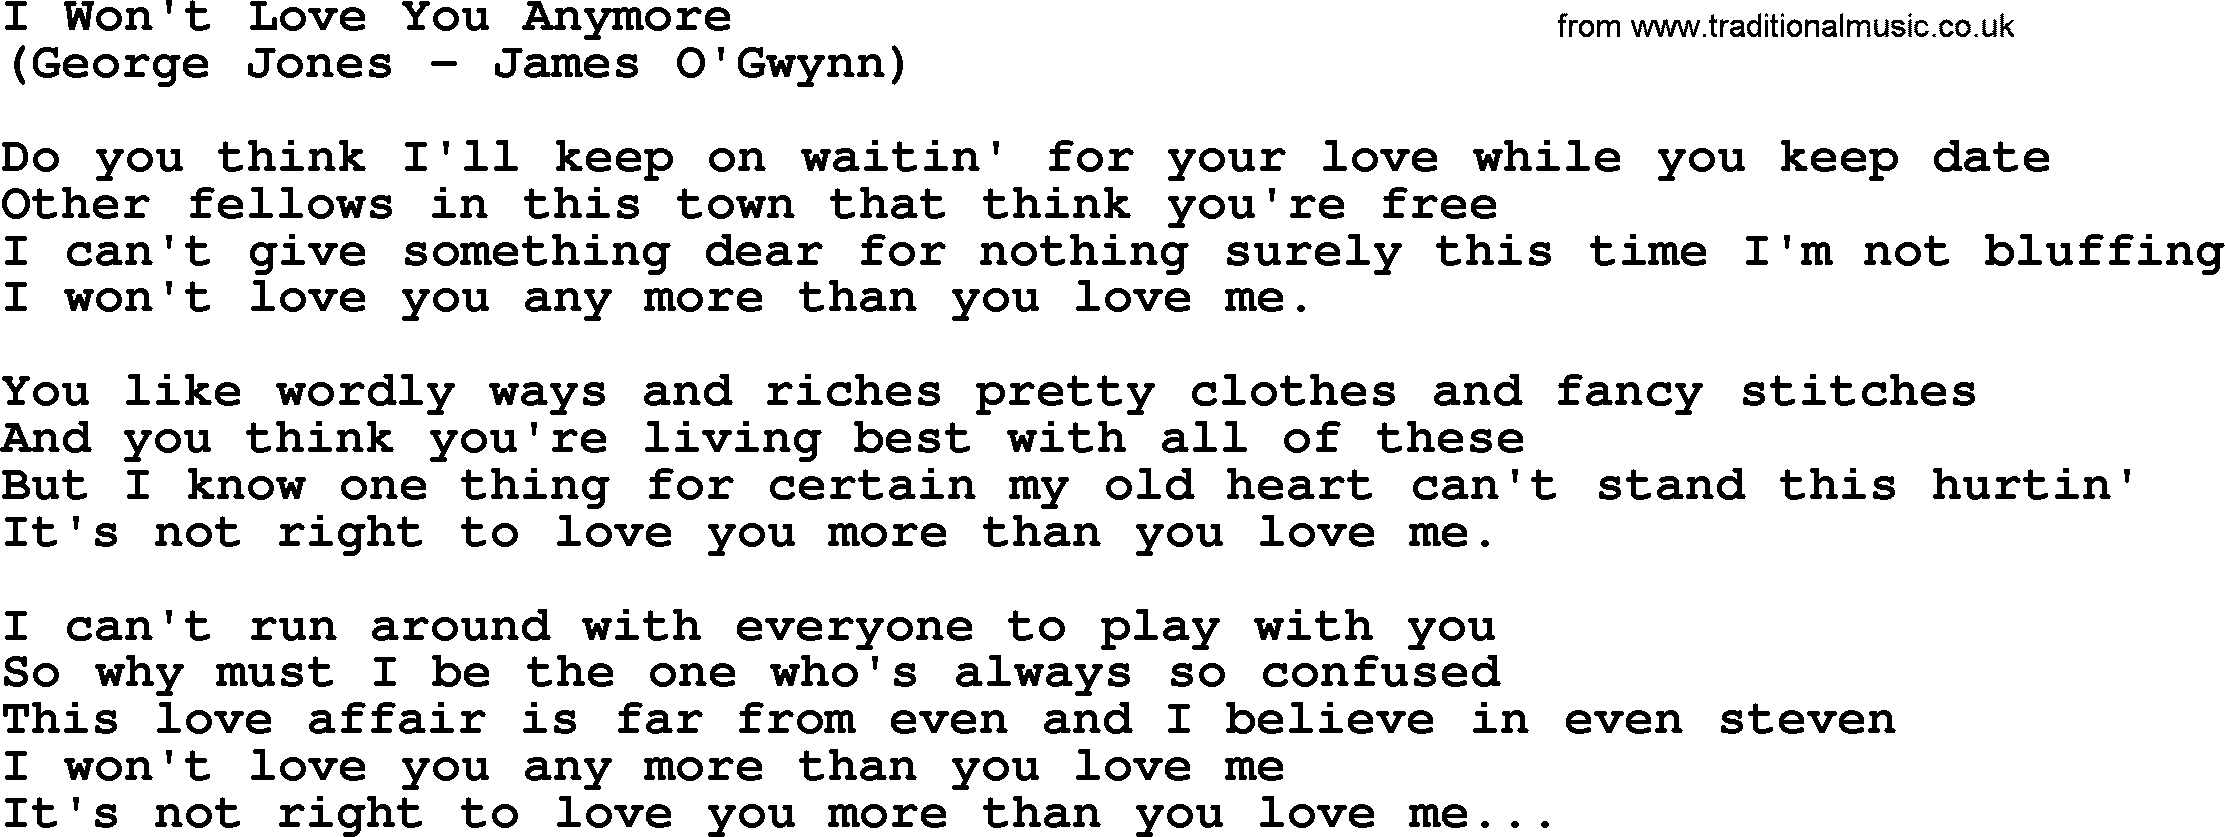 George Jones song: I Won't Love You Anymore, lyrics